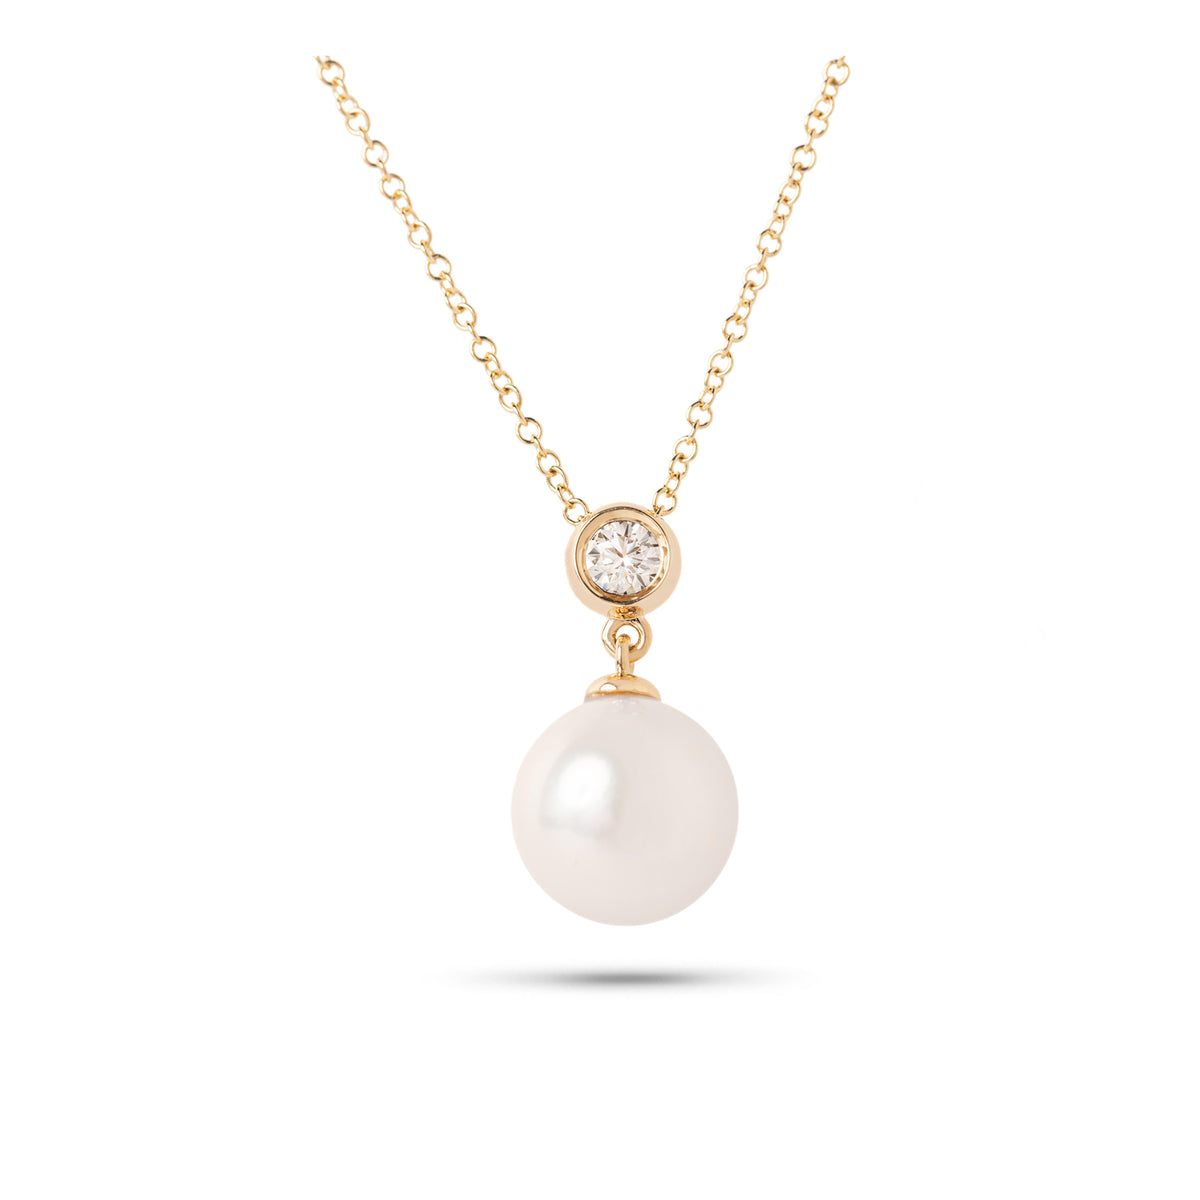 14k yellow gold bezel set diamond with drop pearl pendant necklace